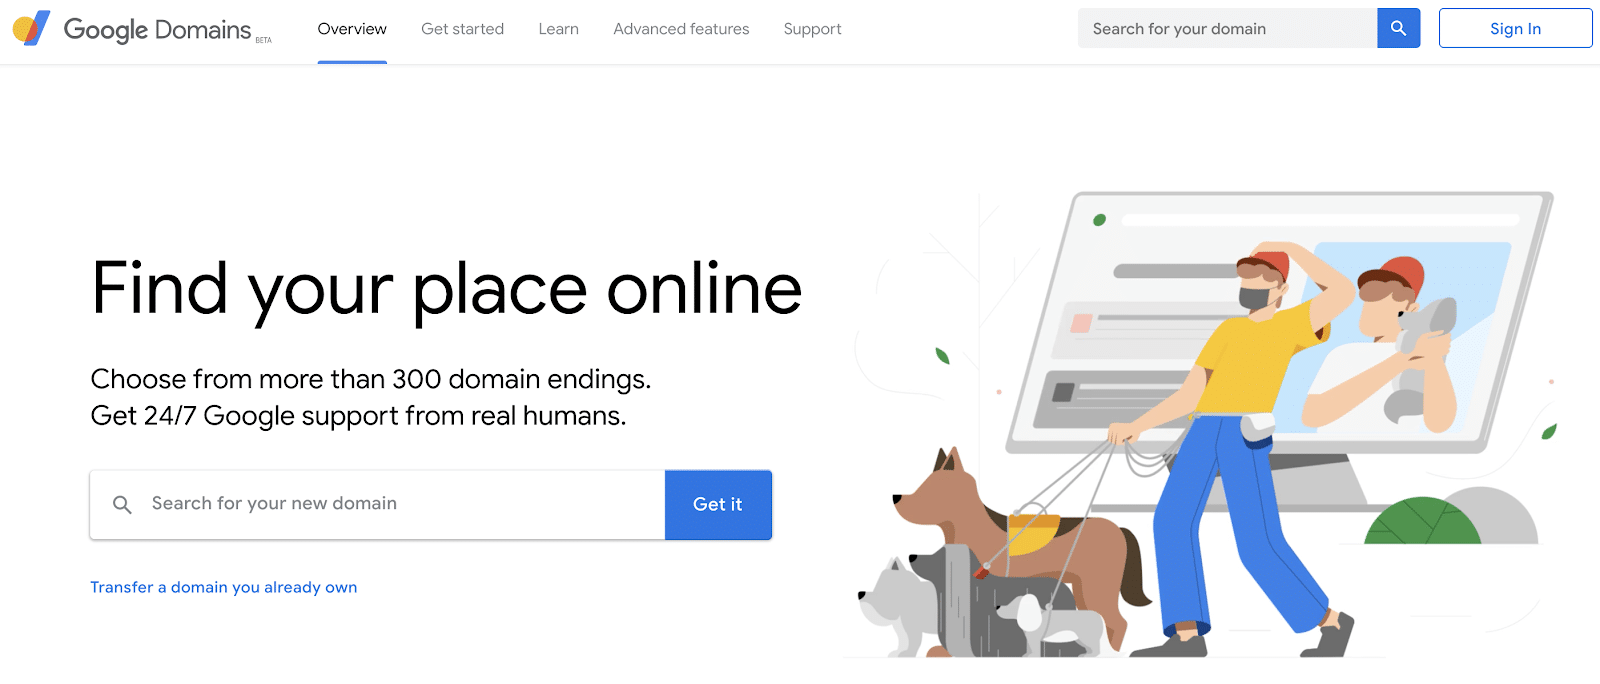 google domains homepage